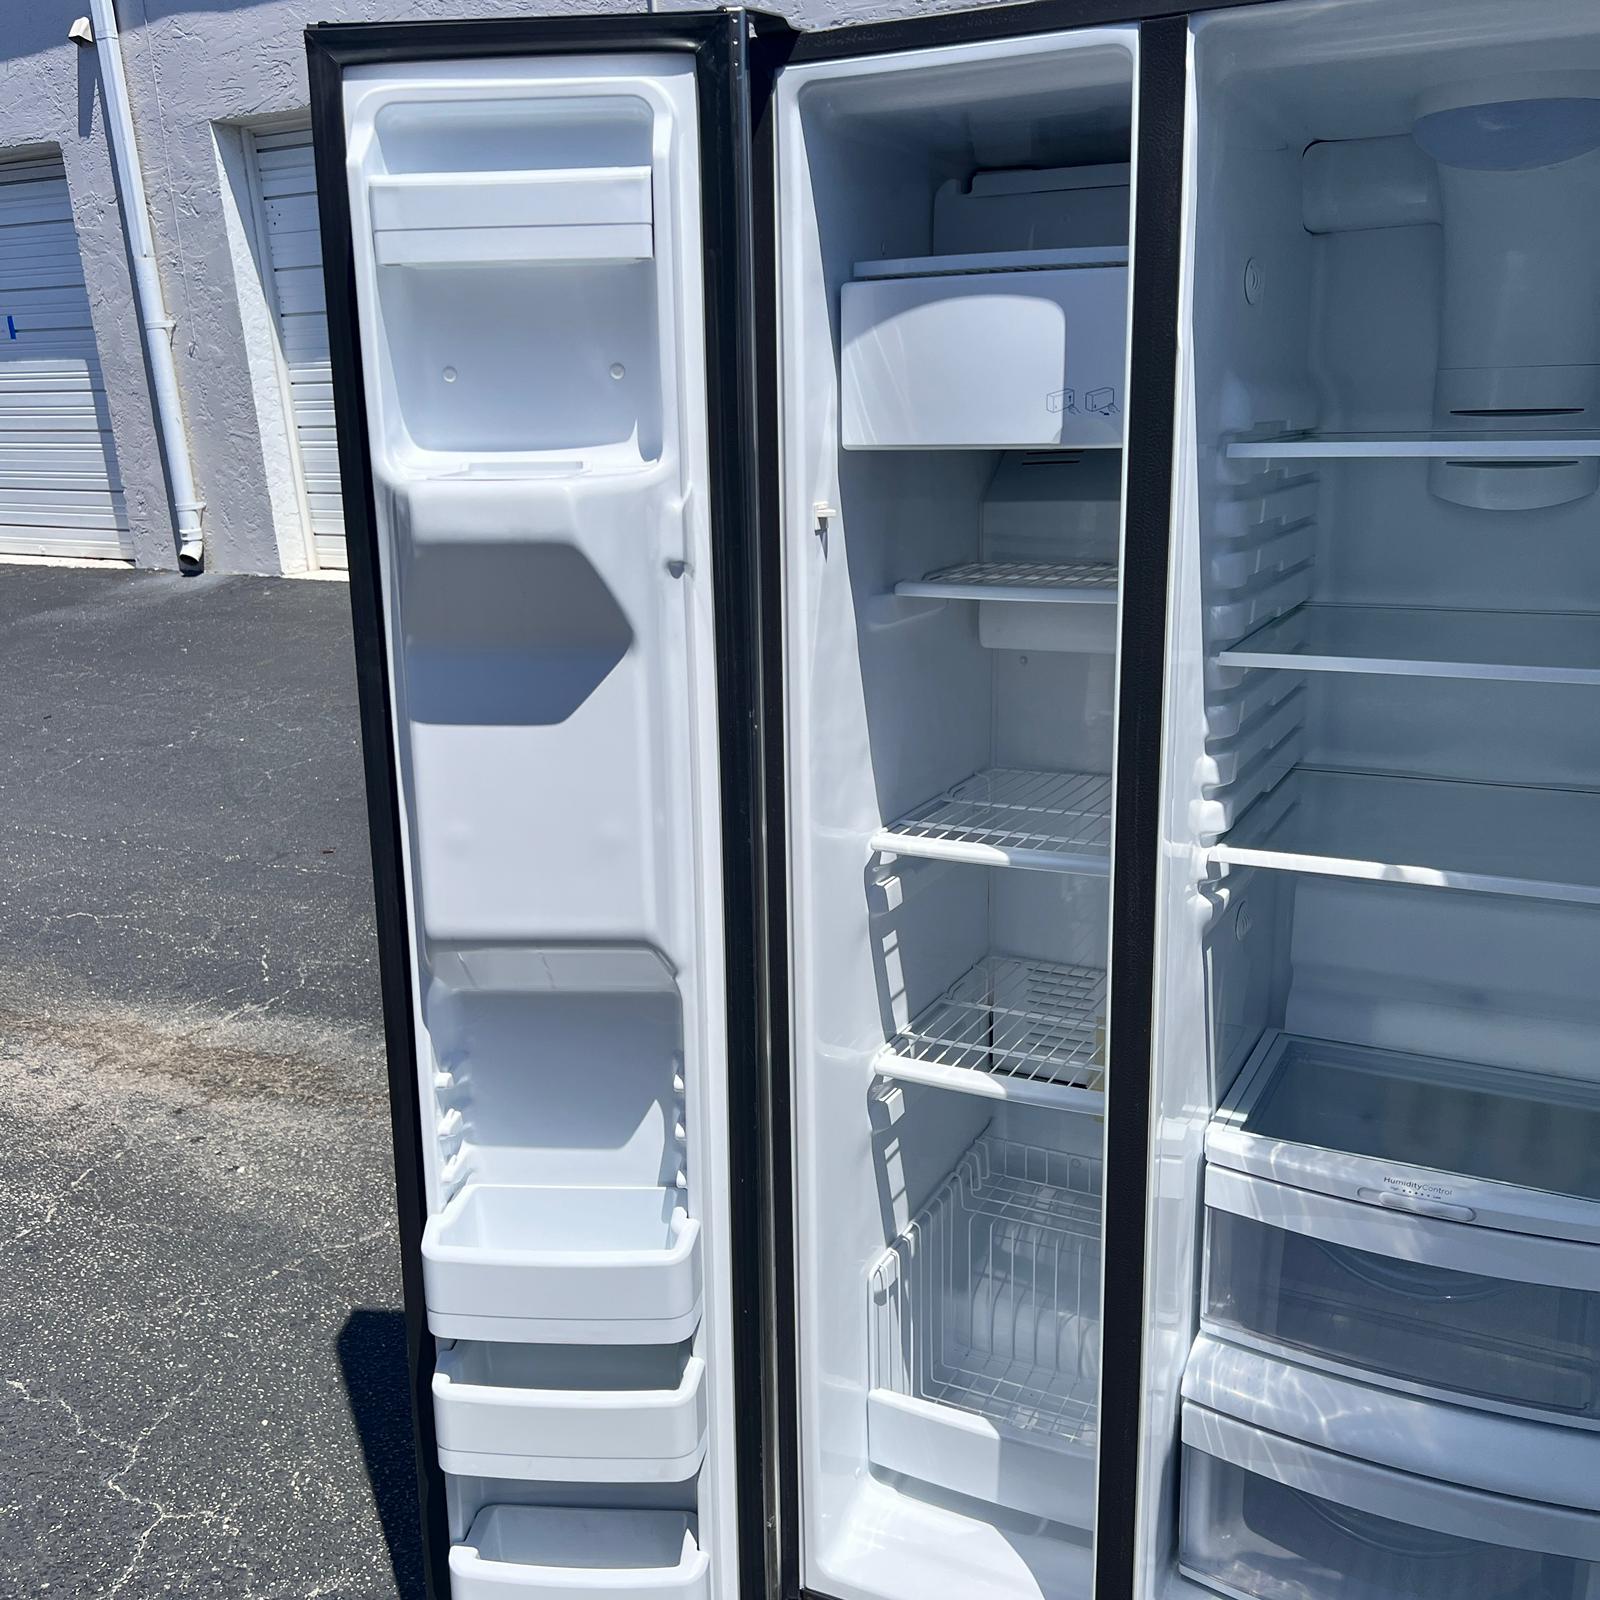 GE Profile Stainless Steel Refrigerator